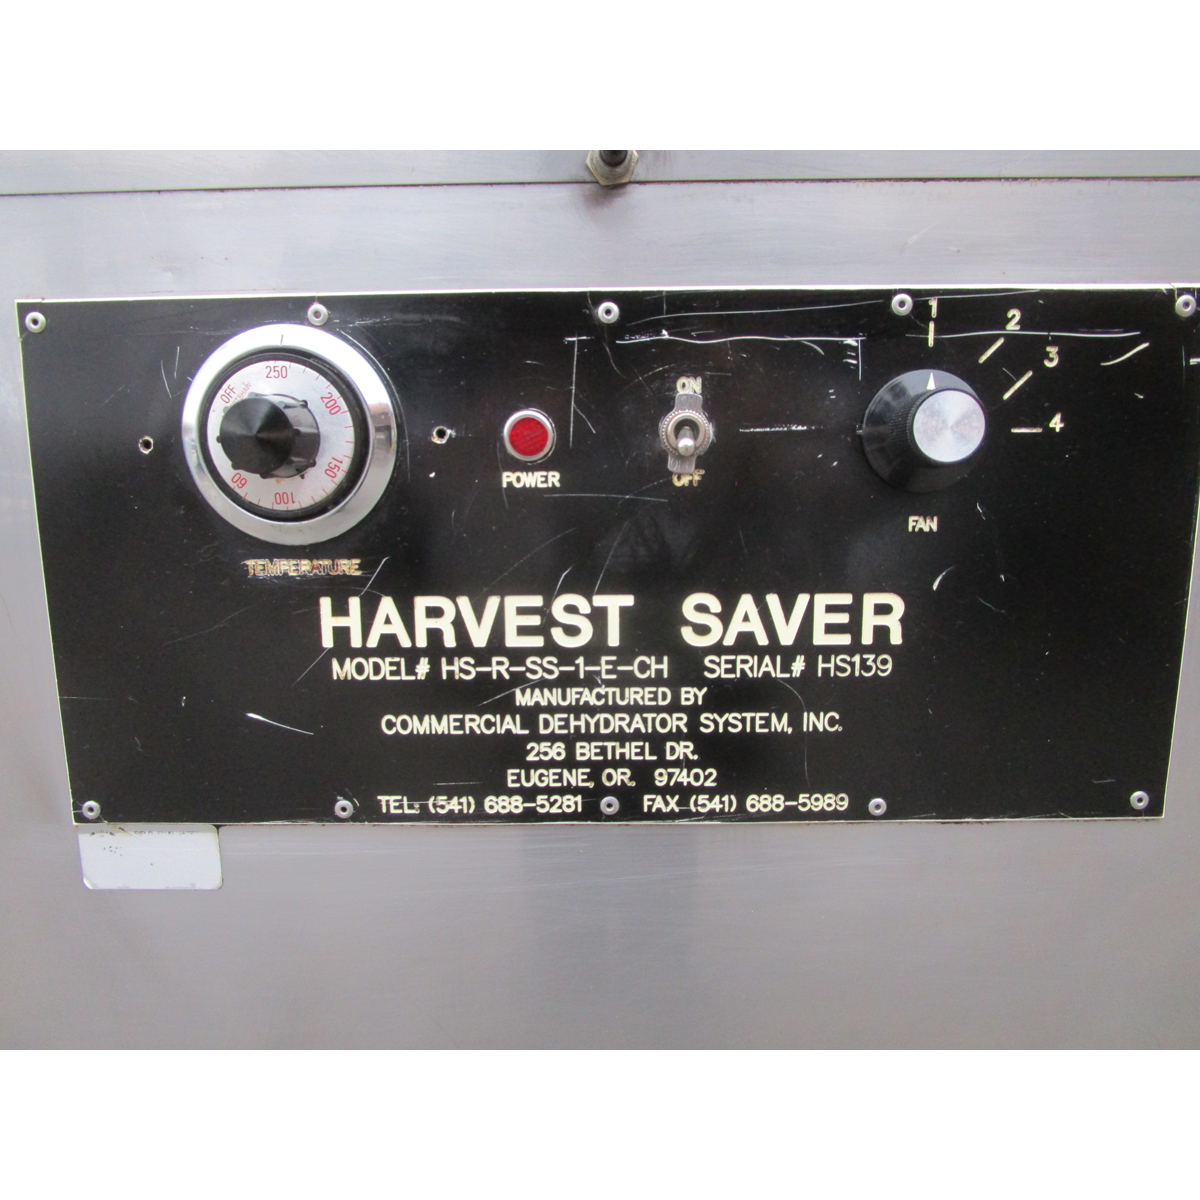 Harvest Saver HR-R-SS-1-E-CH Dehydrator, Good Condition image 5